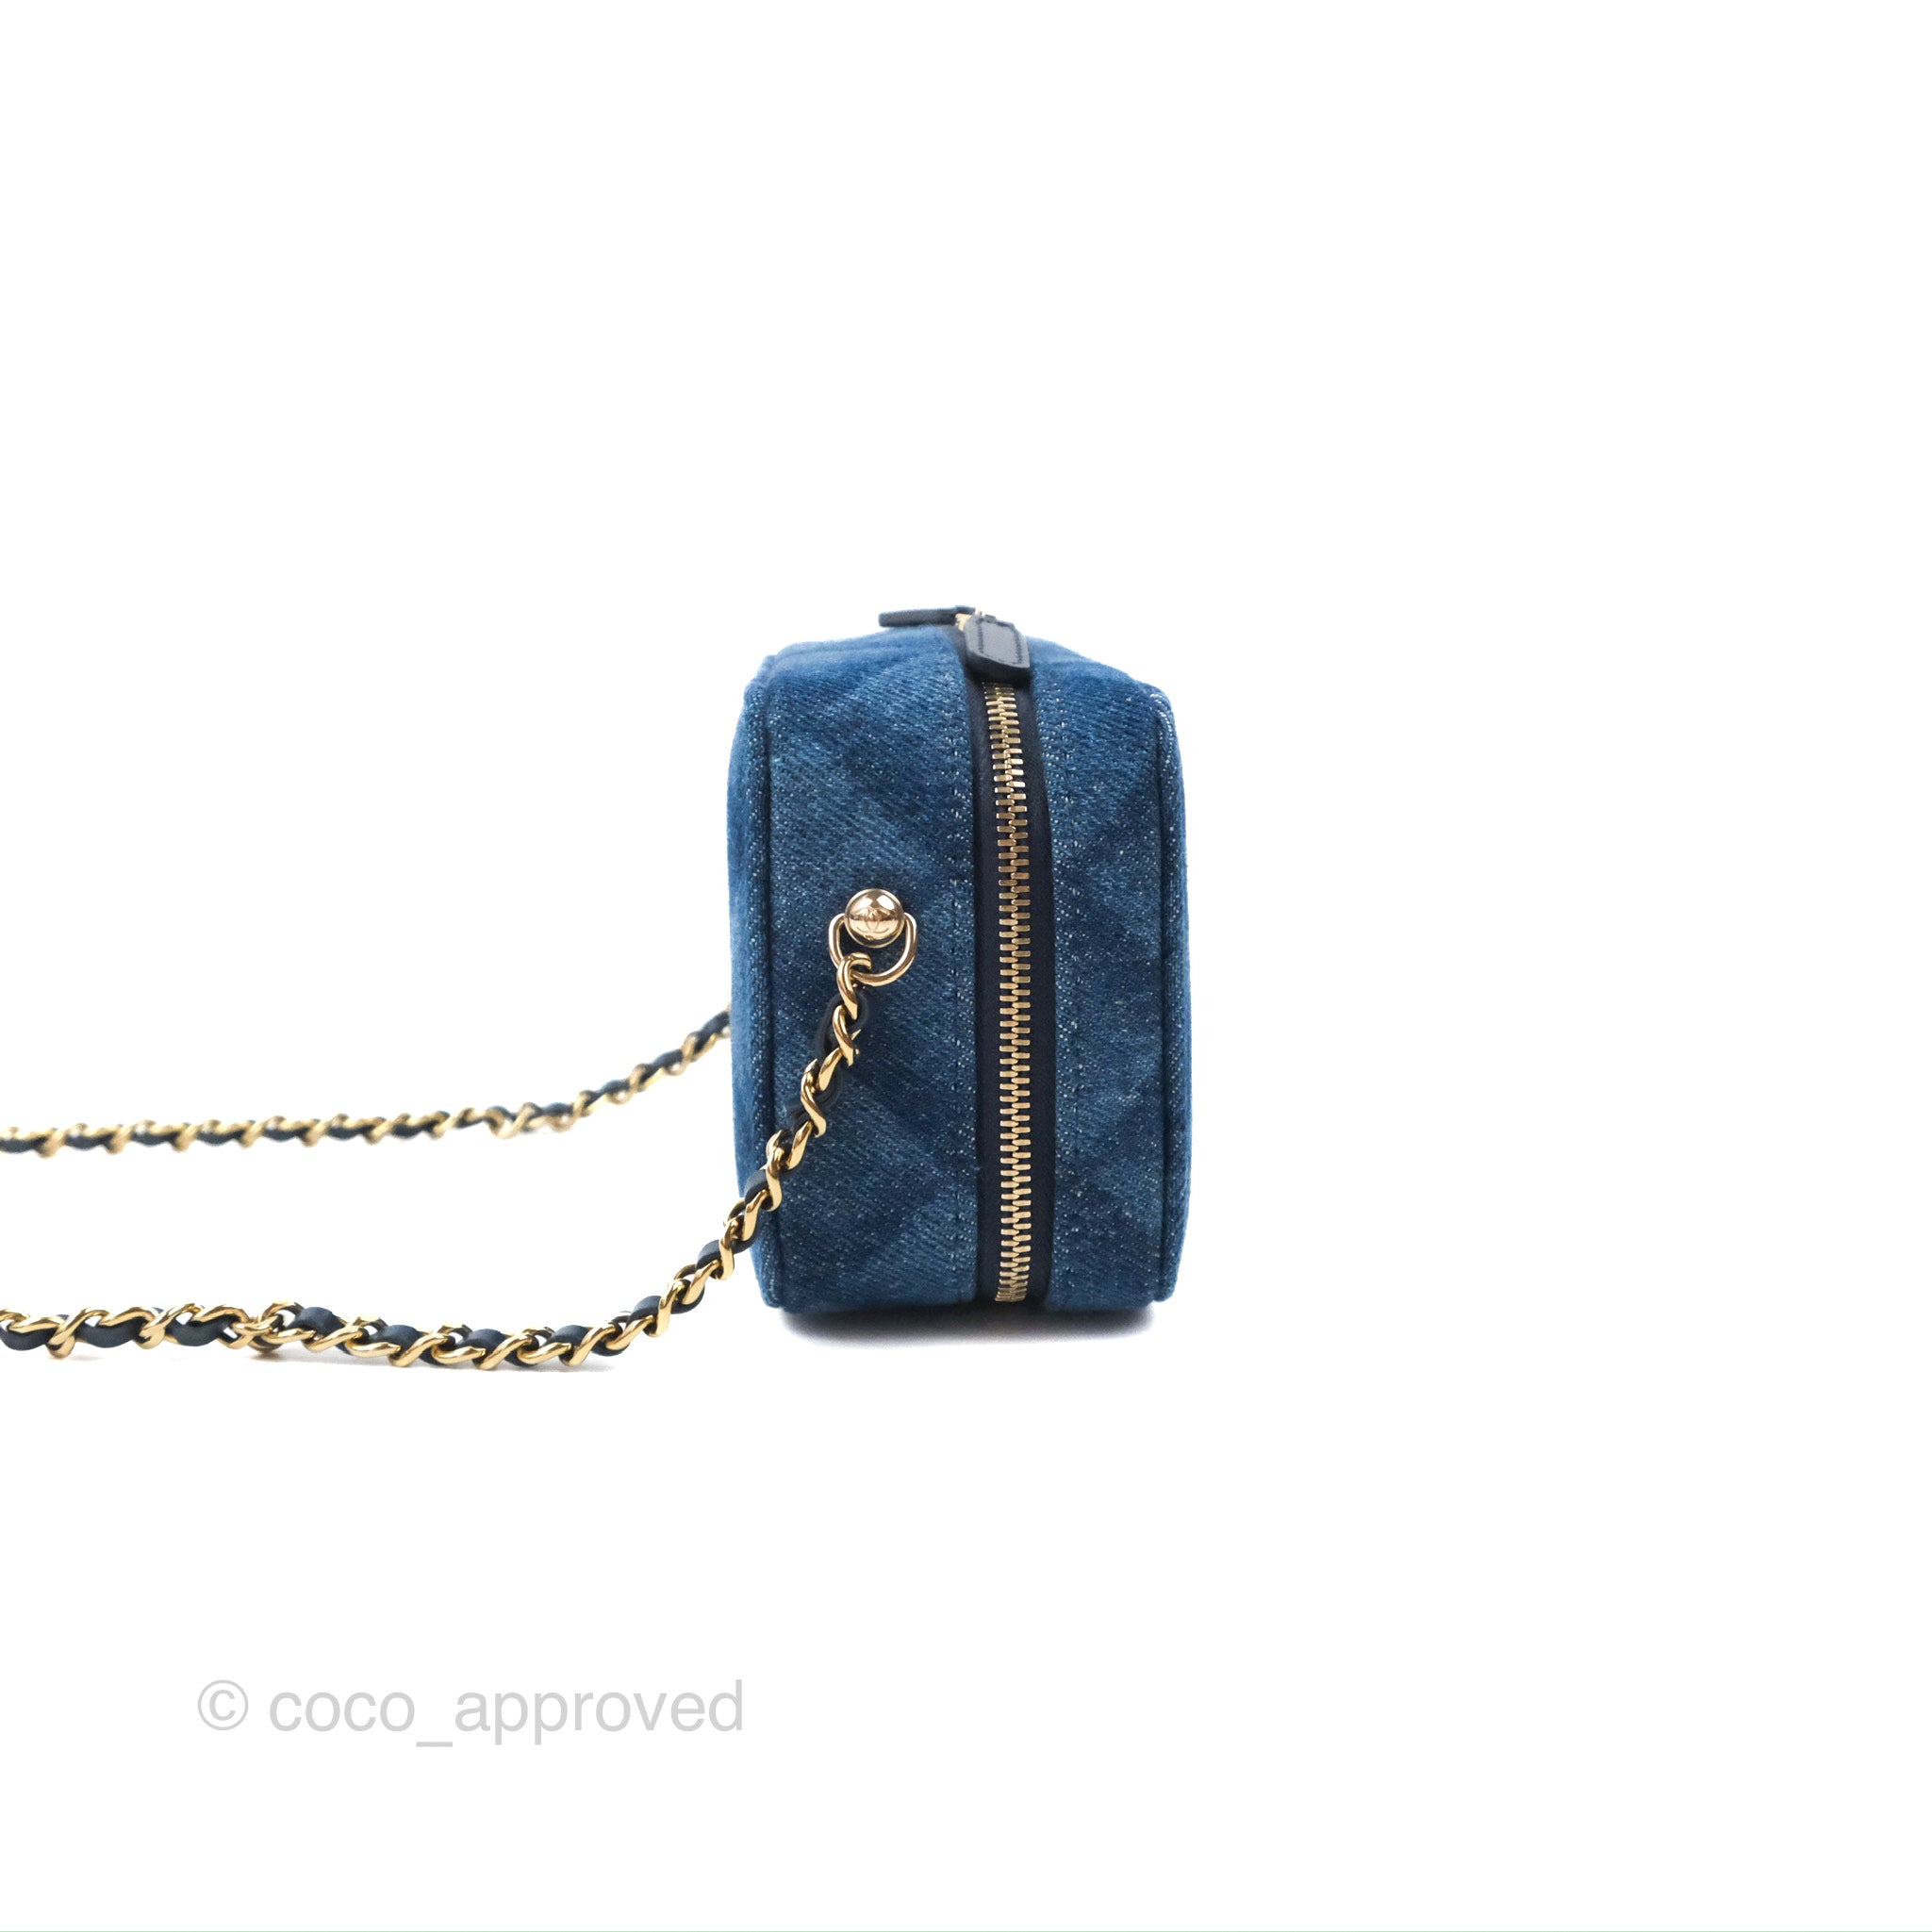 CHANEL - Handbag model Camera in navy blue quilted lea…